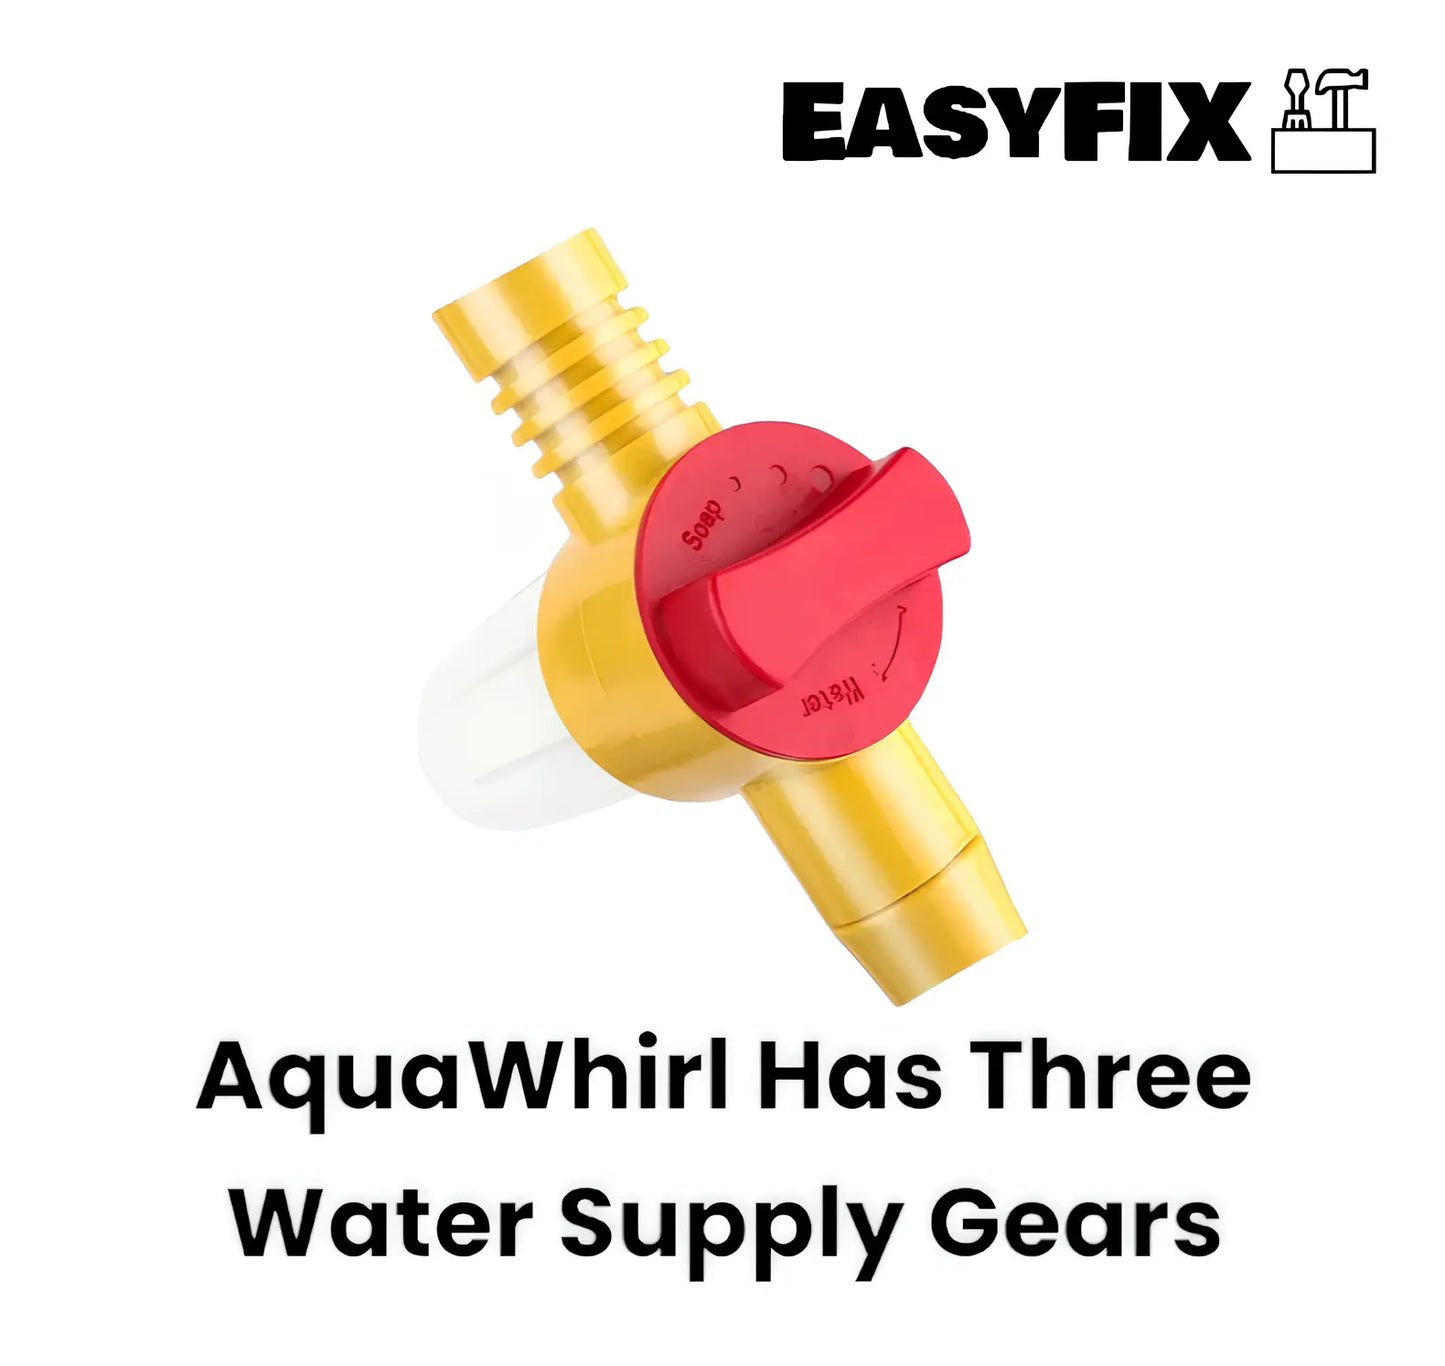 EasyFiX™ AquaWhirl Brush